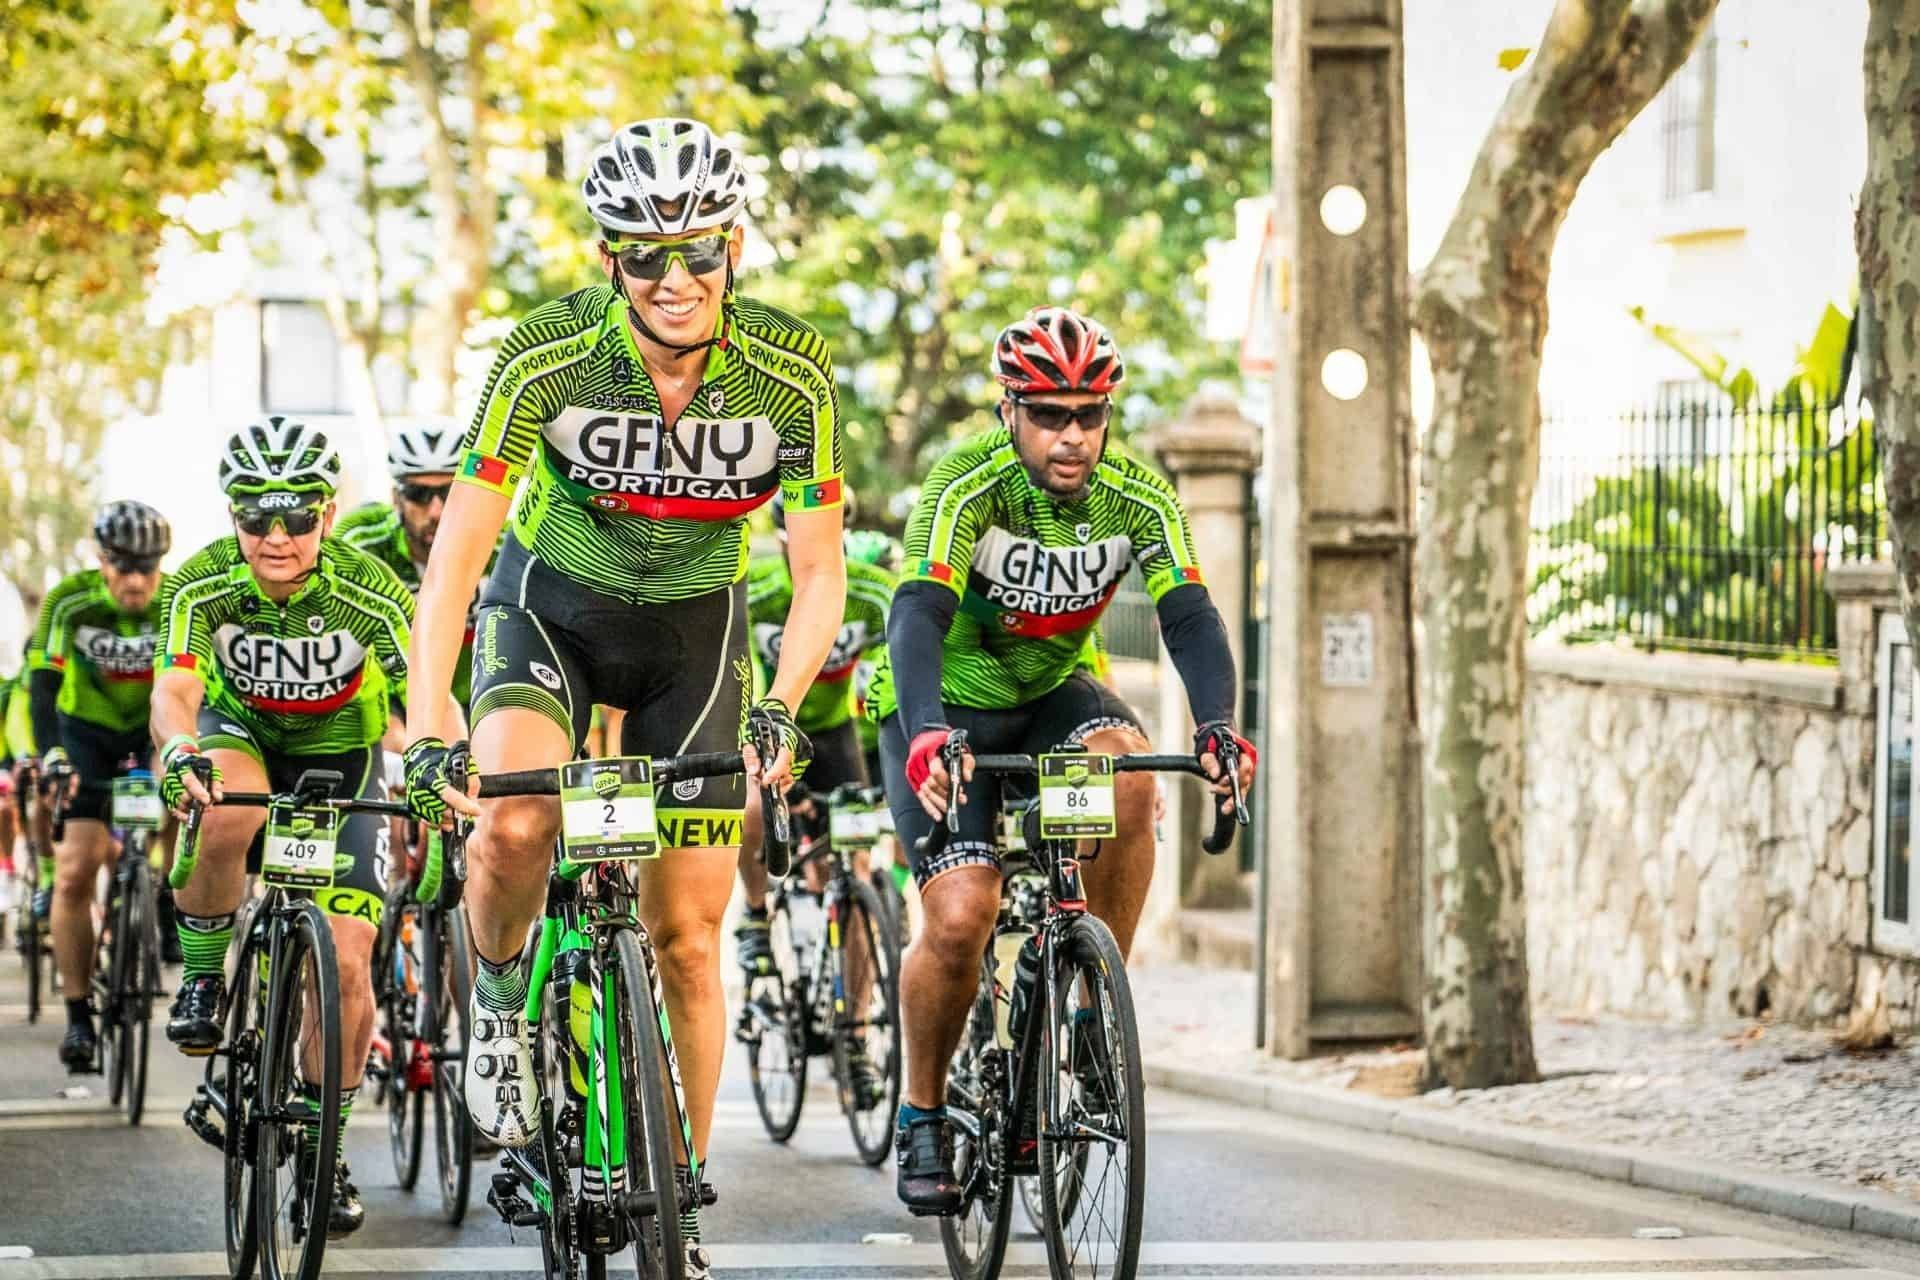 GFNY Portugal Cycling Camp - granfondo